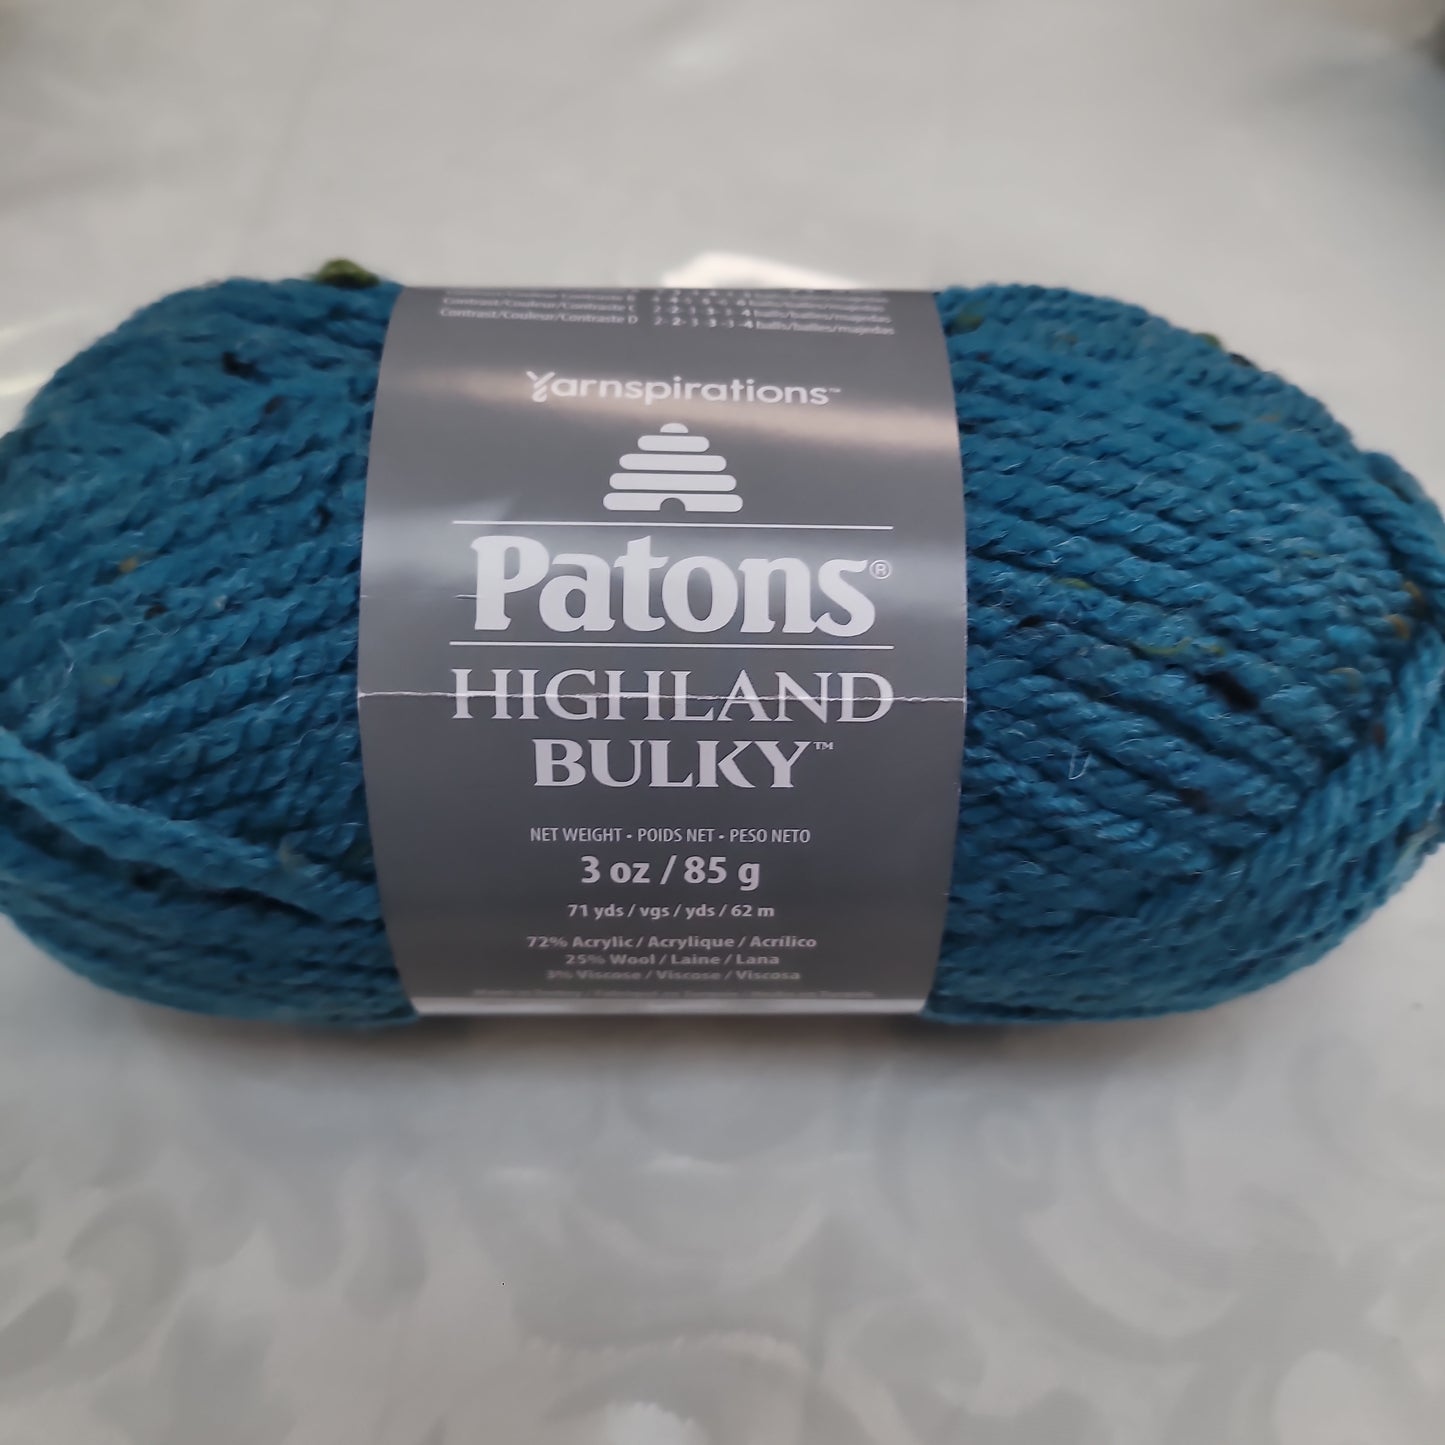 Patons Highland chunky